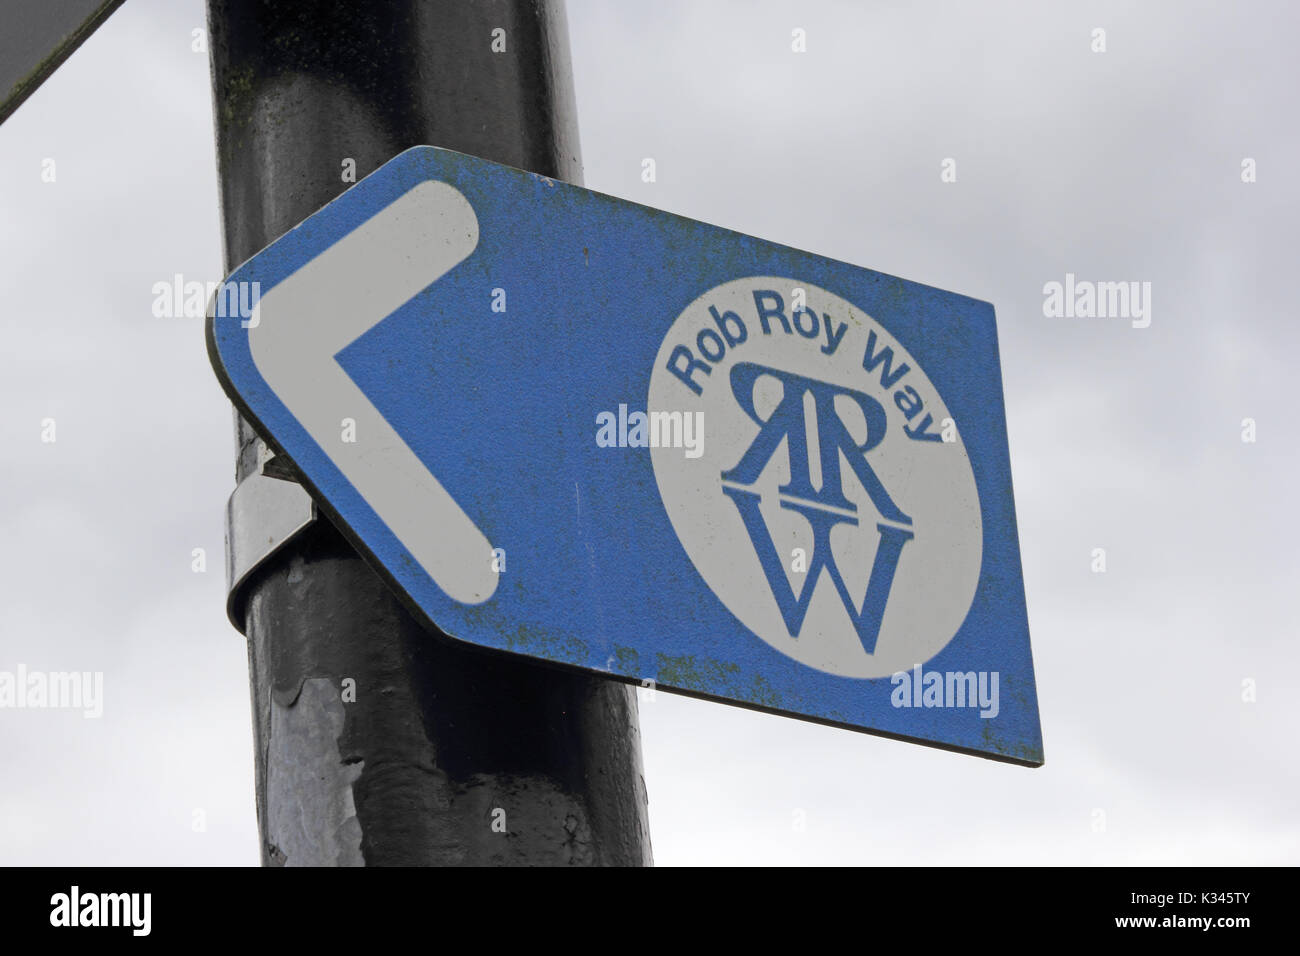 Rob Roy Way sign, Aberfoyle, Scotland Stock Photo